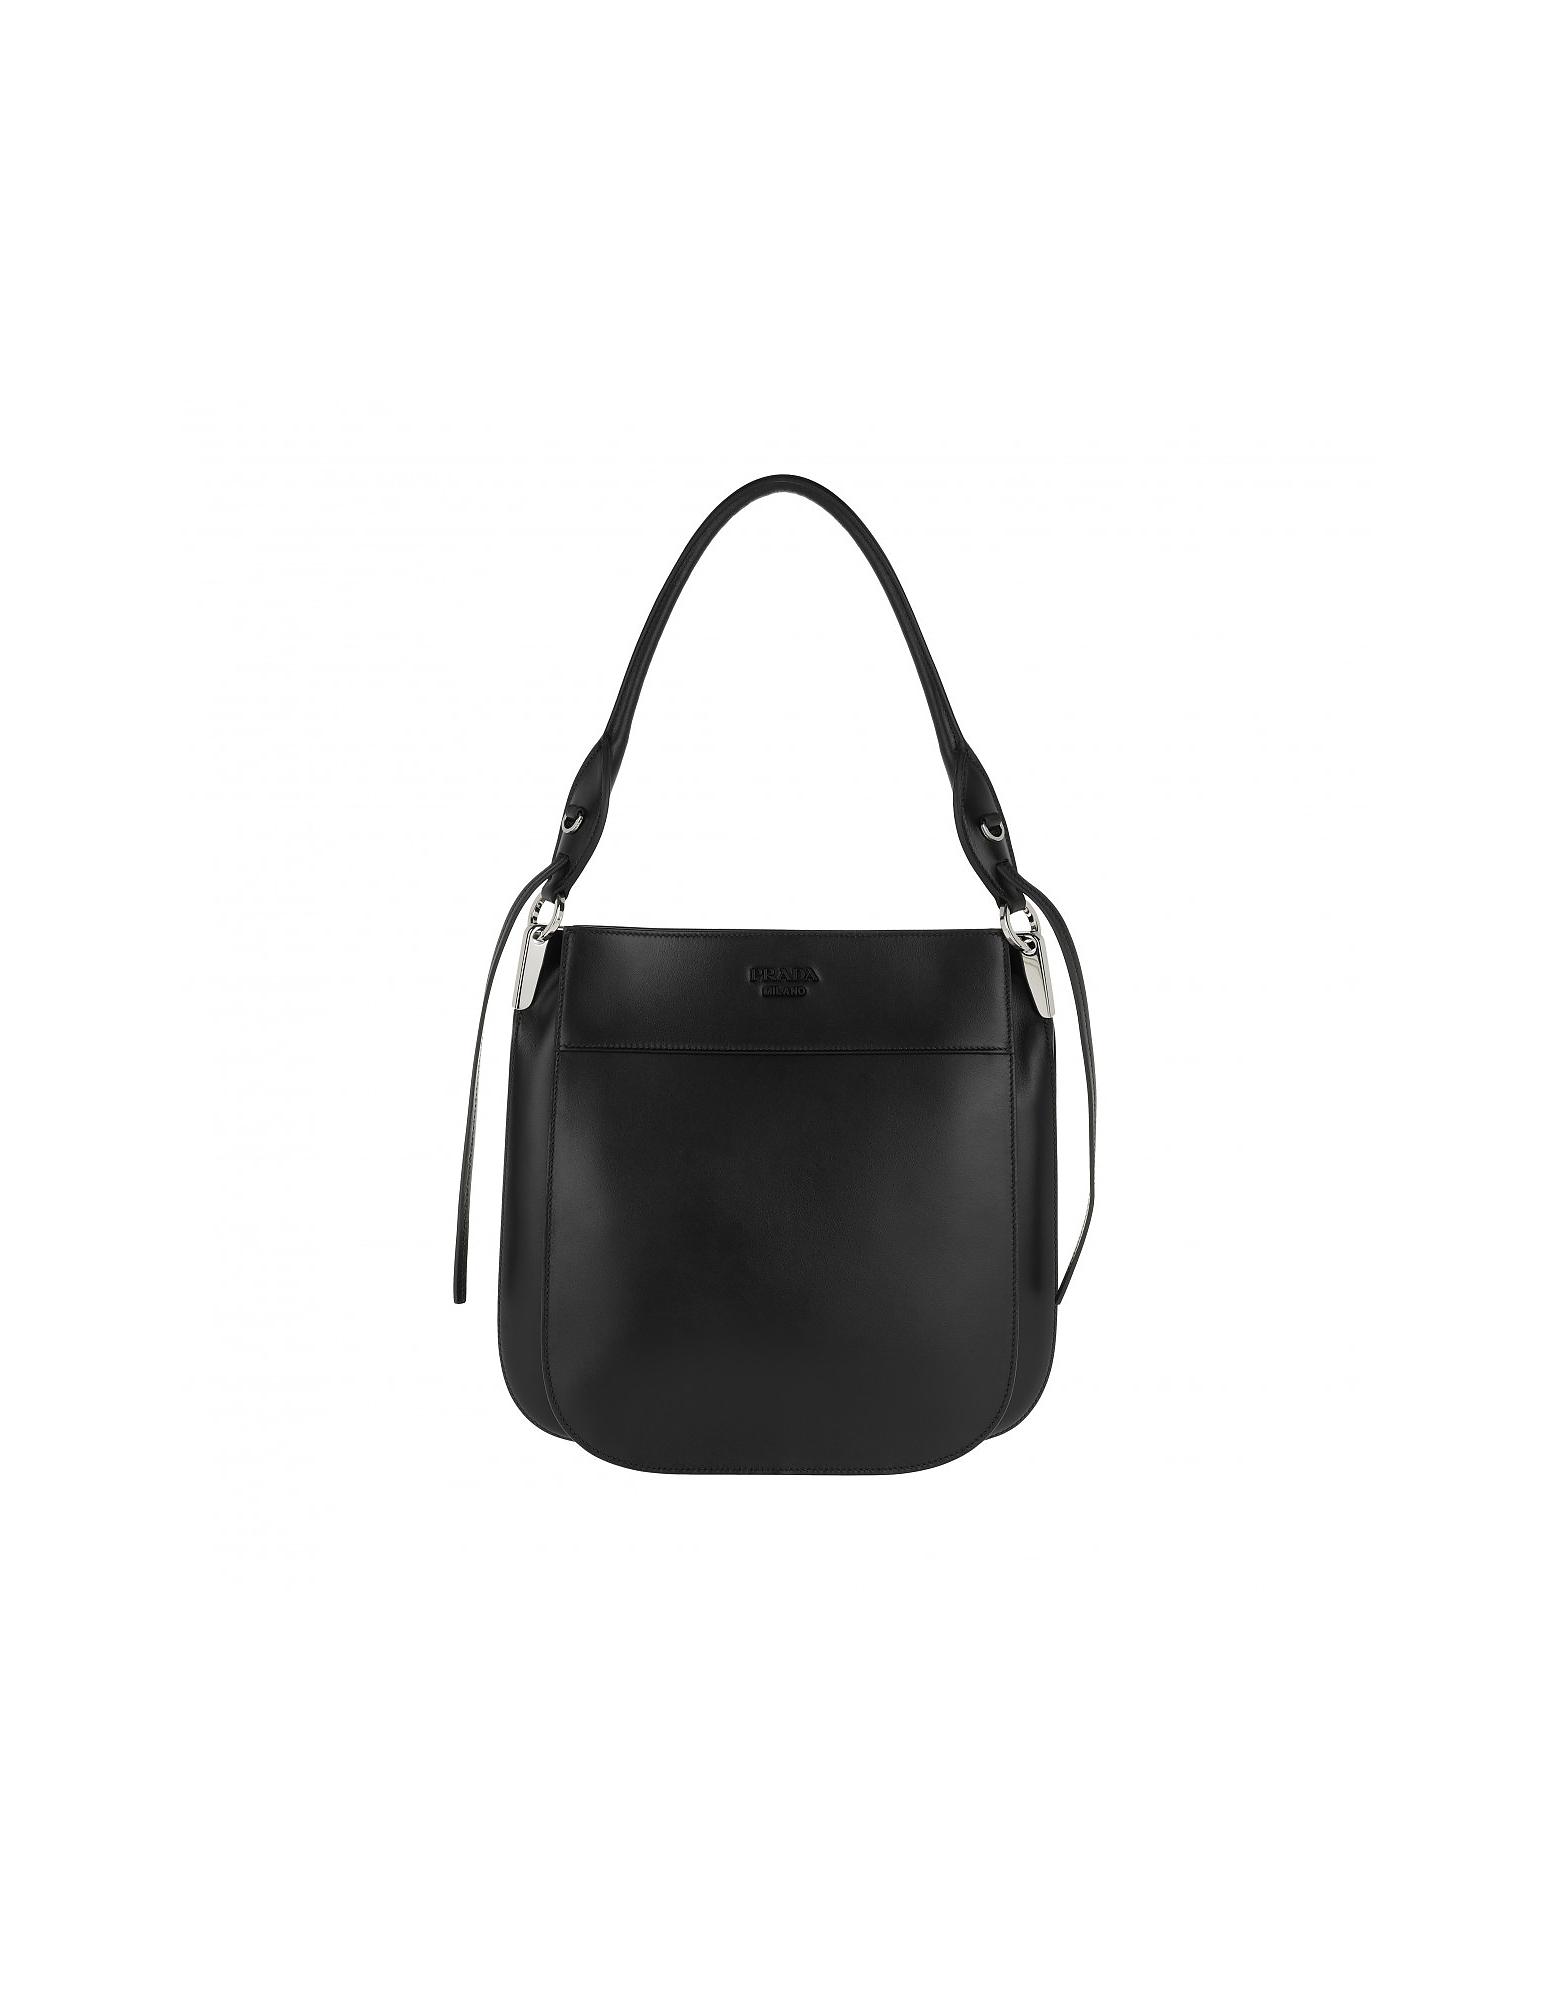 Prada Margit Leather Shoulder Bag Nero in Black - Lyst